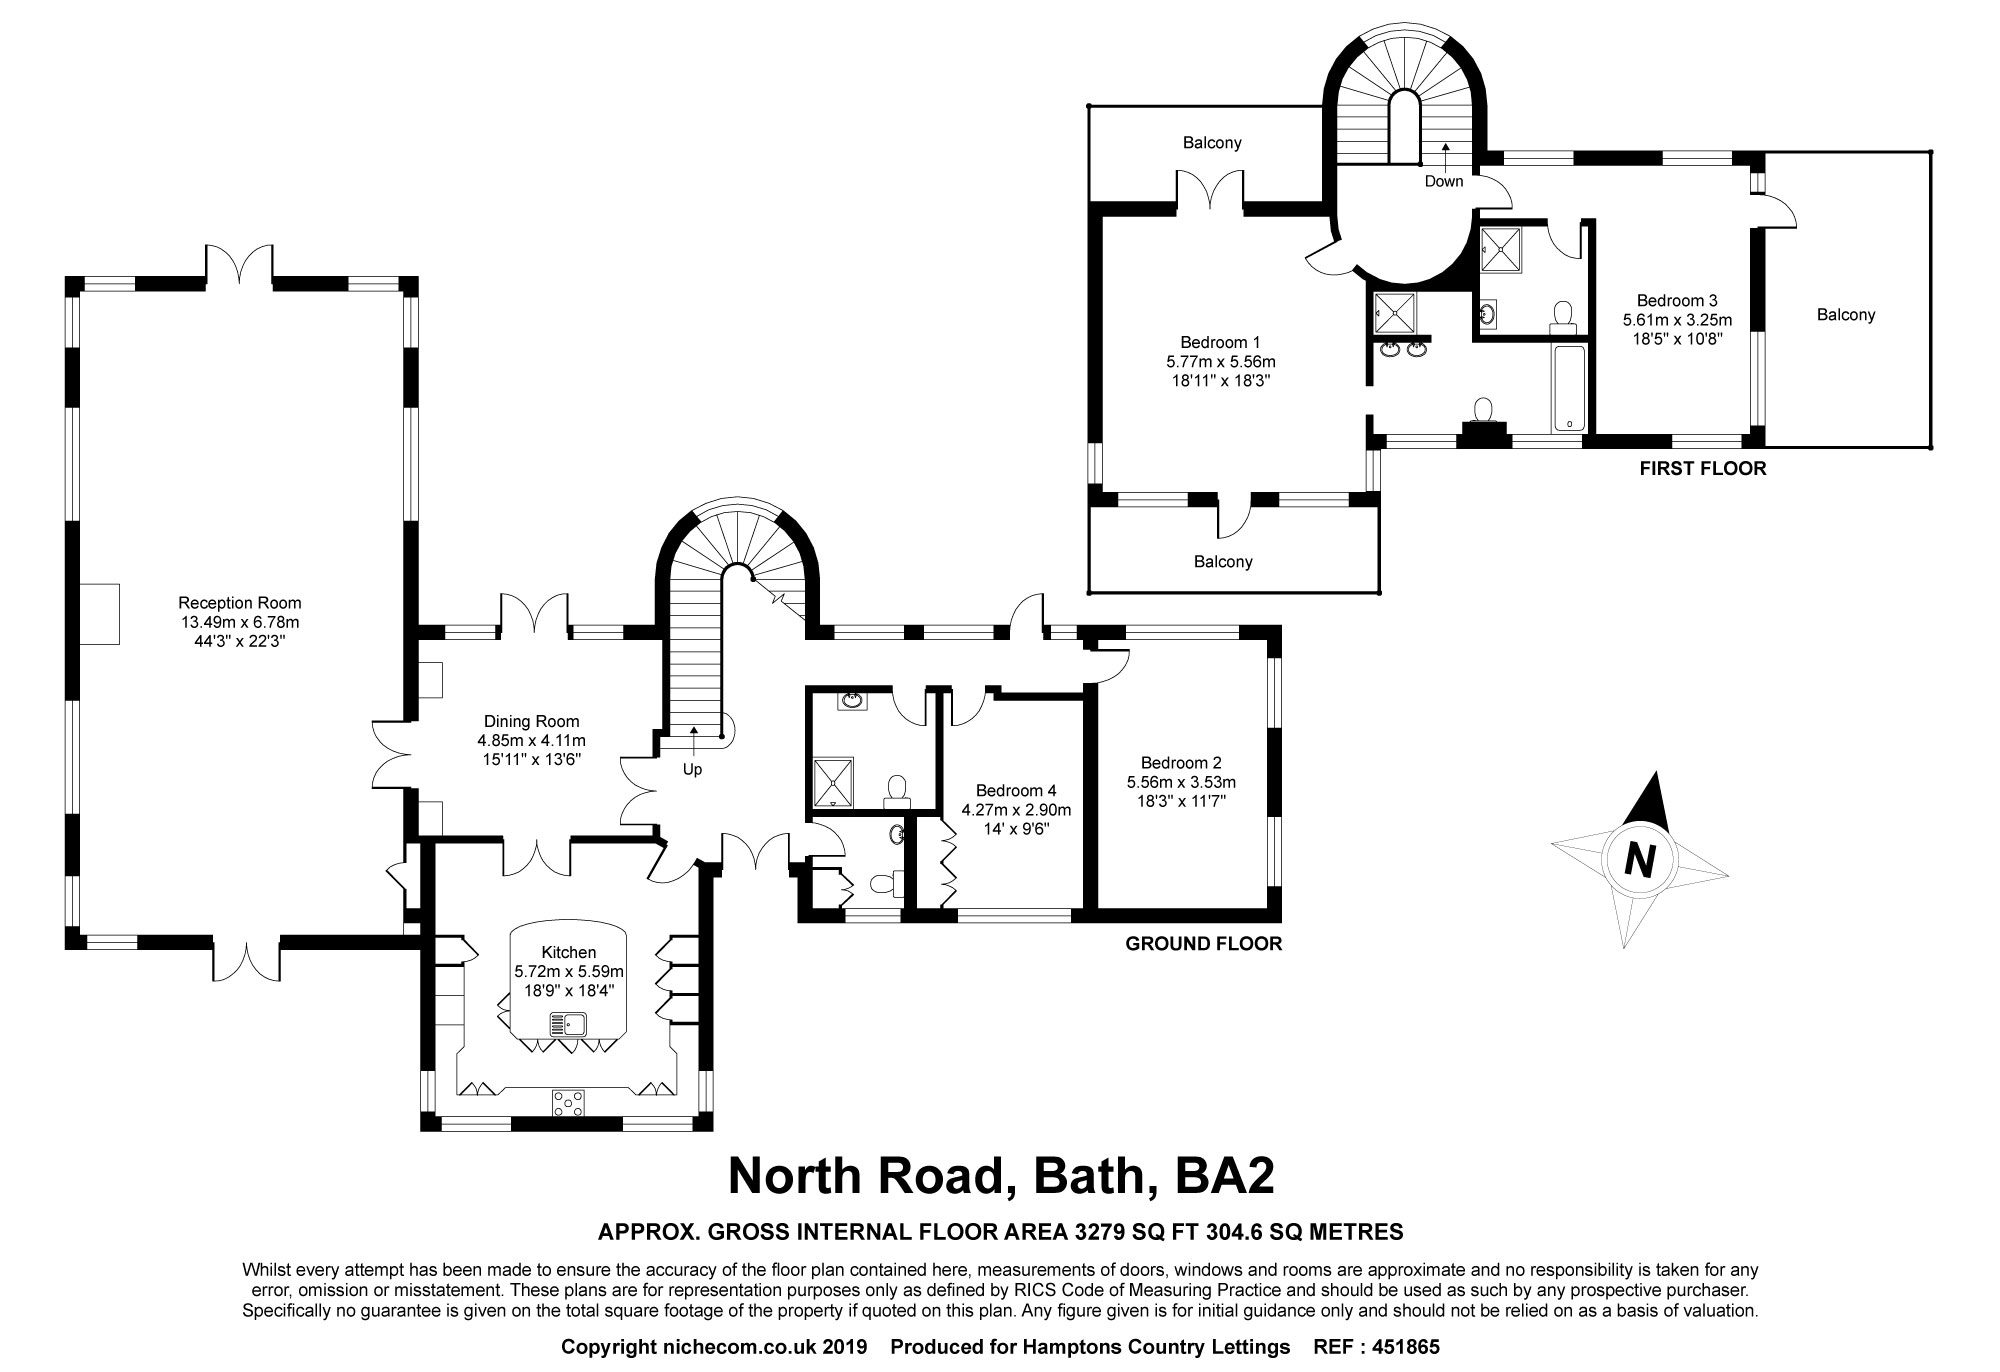 4 Bedrooms Detached house to rent in North Road, Bathwick, Bath BA2